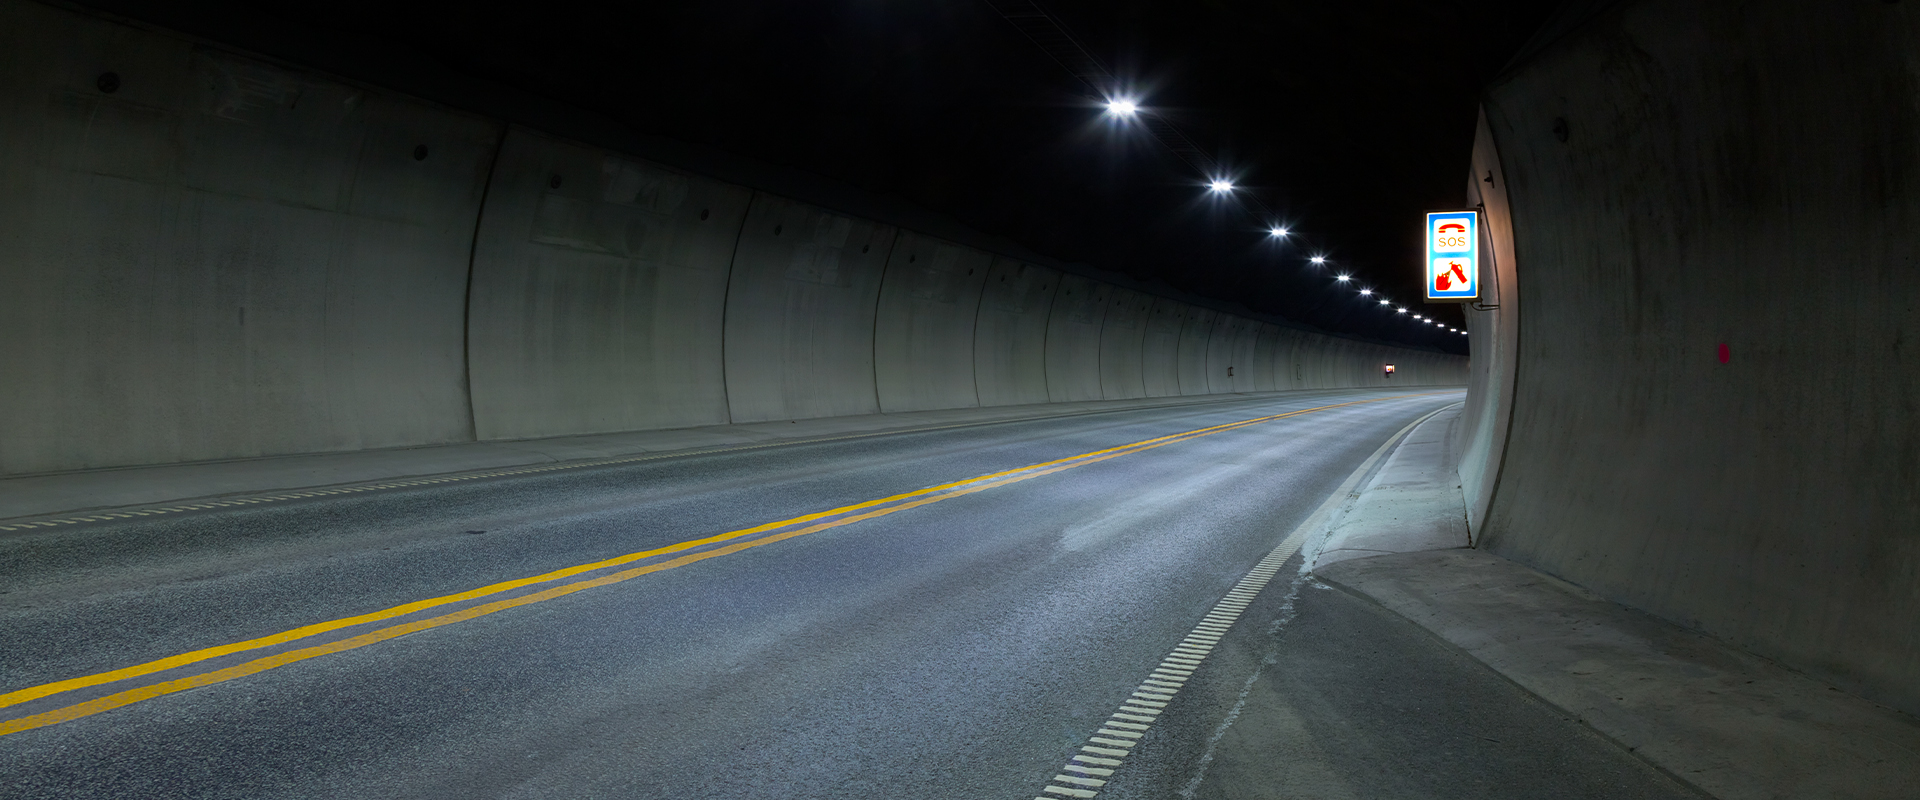 LED tunnel floodlight